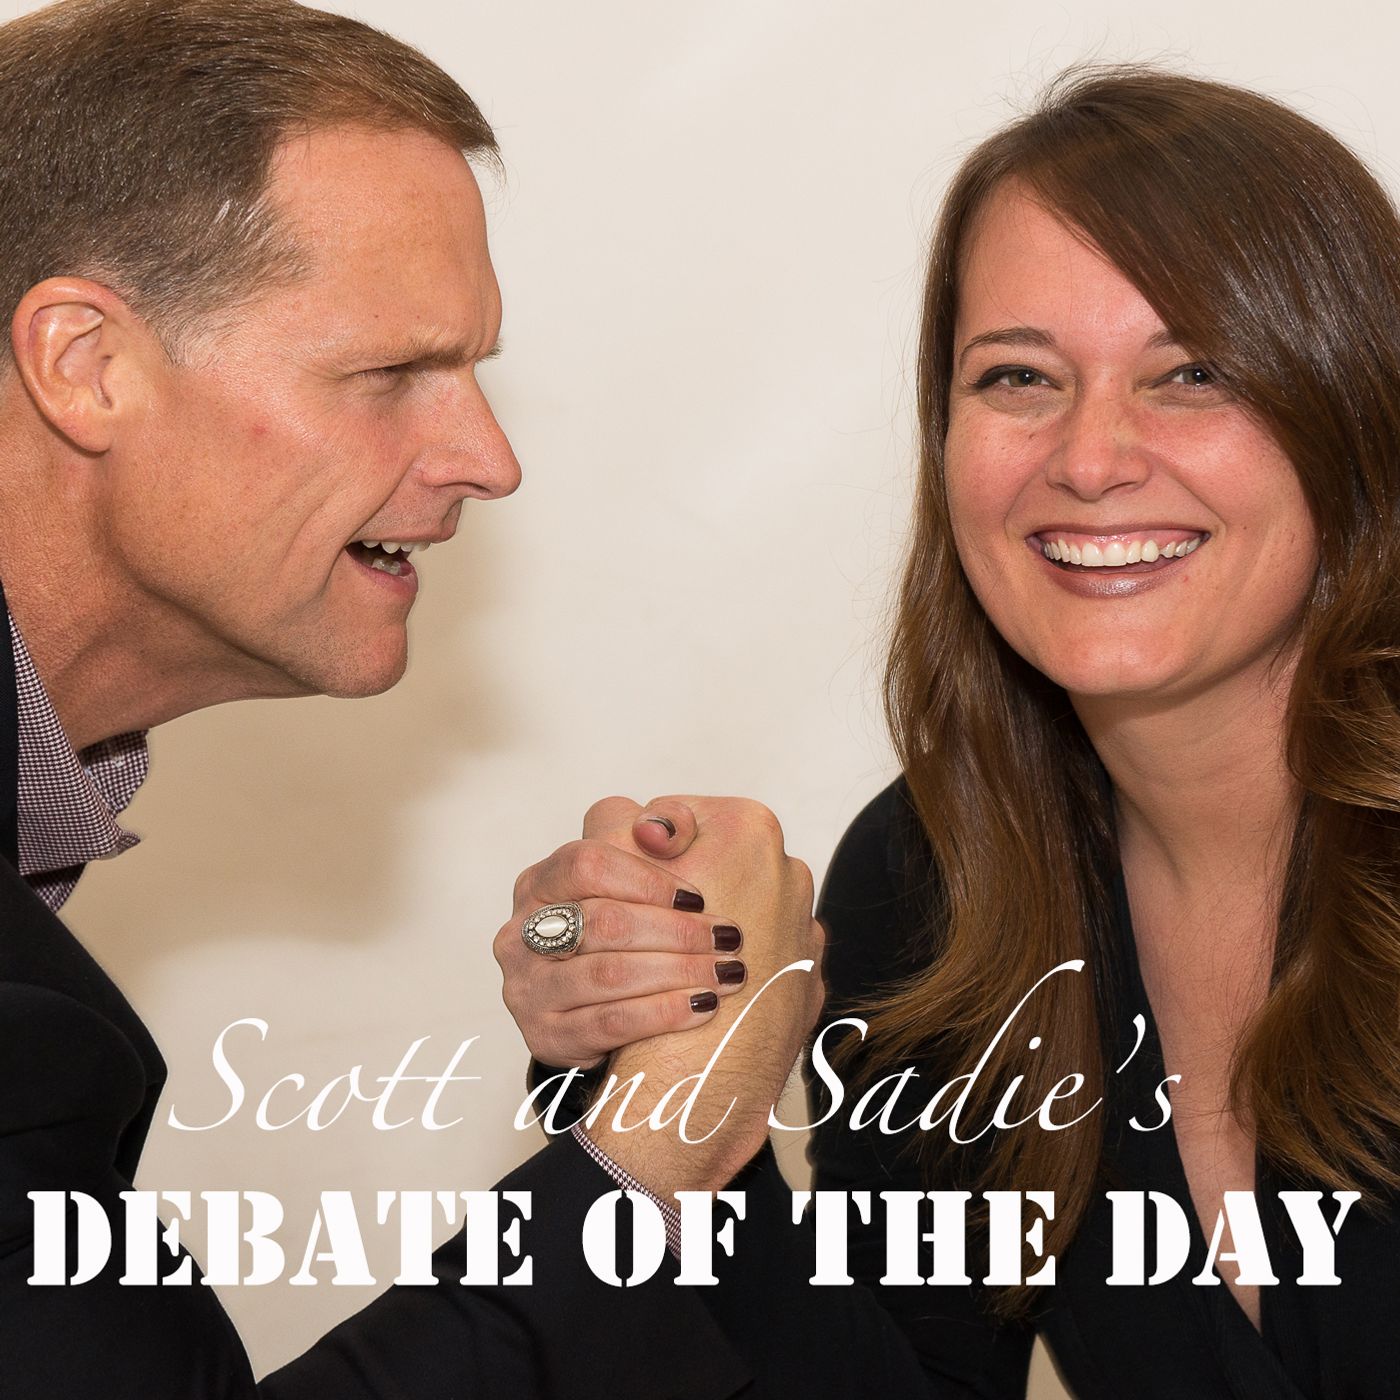 Scott and Sadie's Debate of the Day